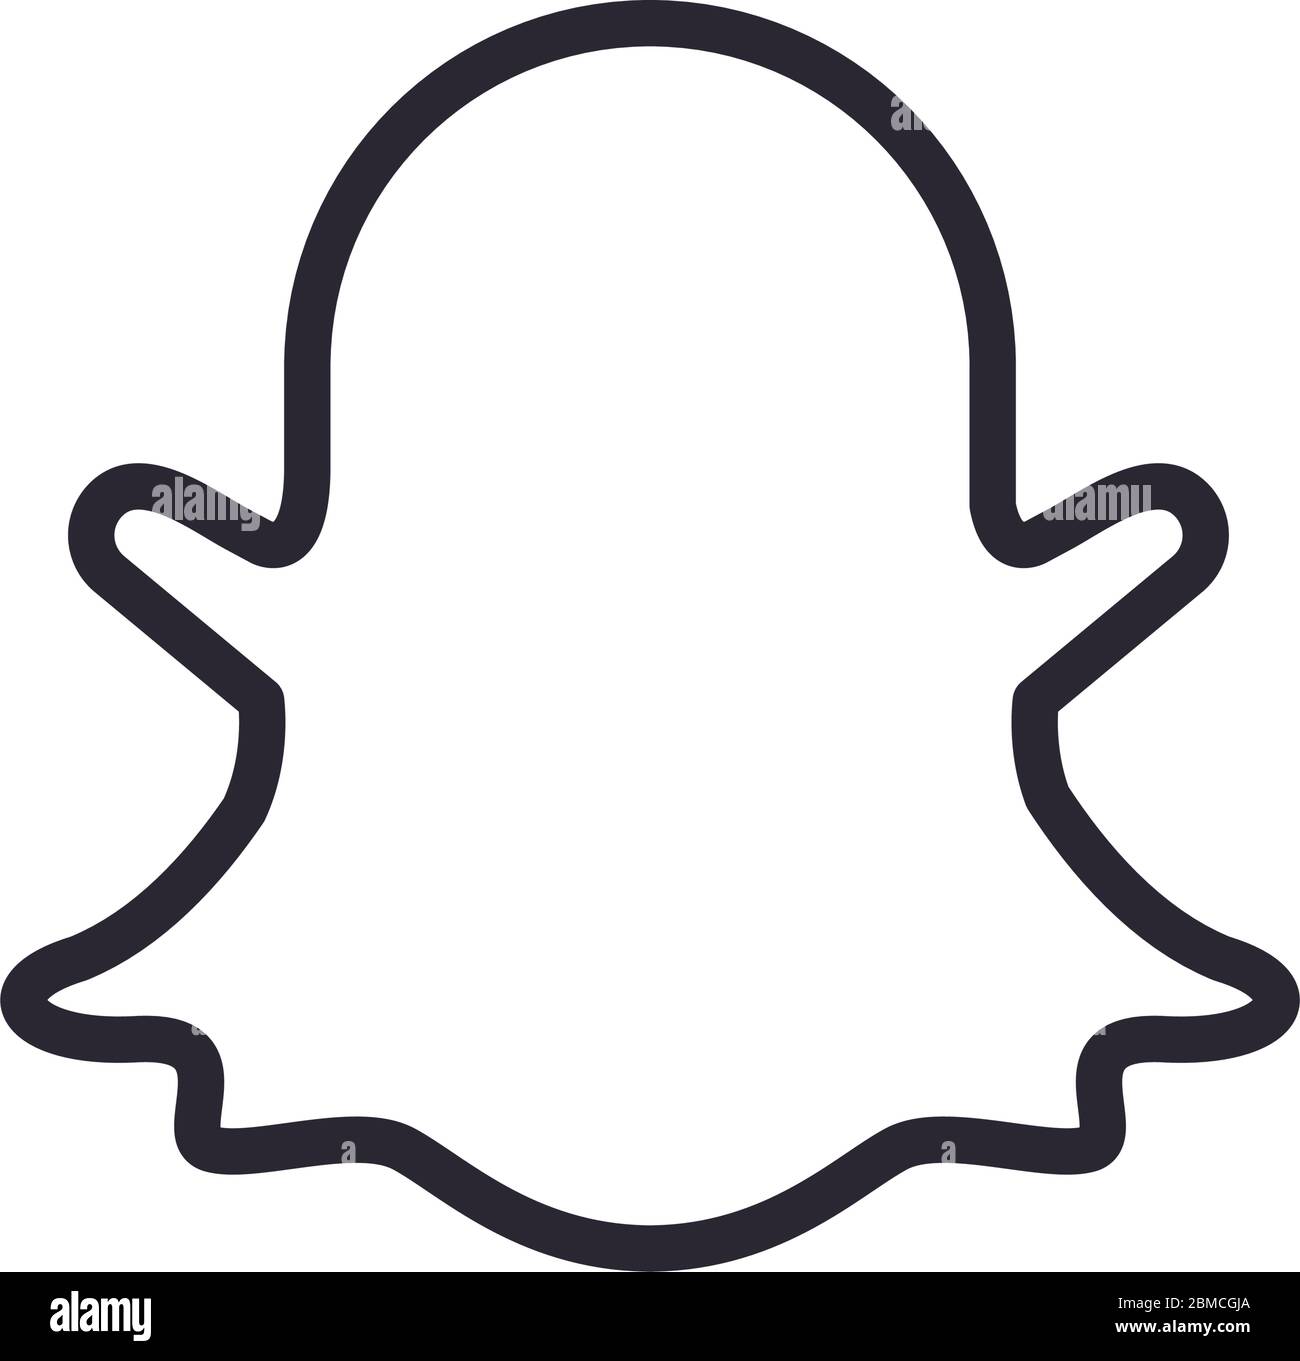 snapchat logo vector file